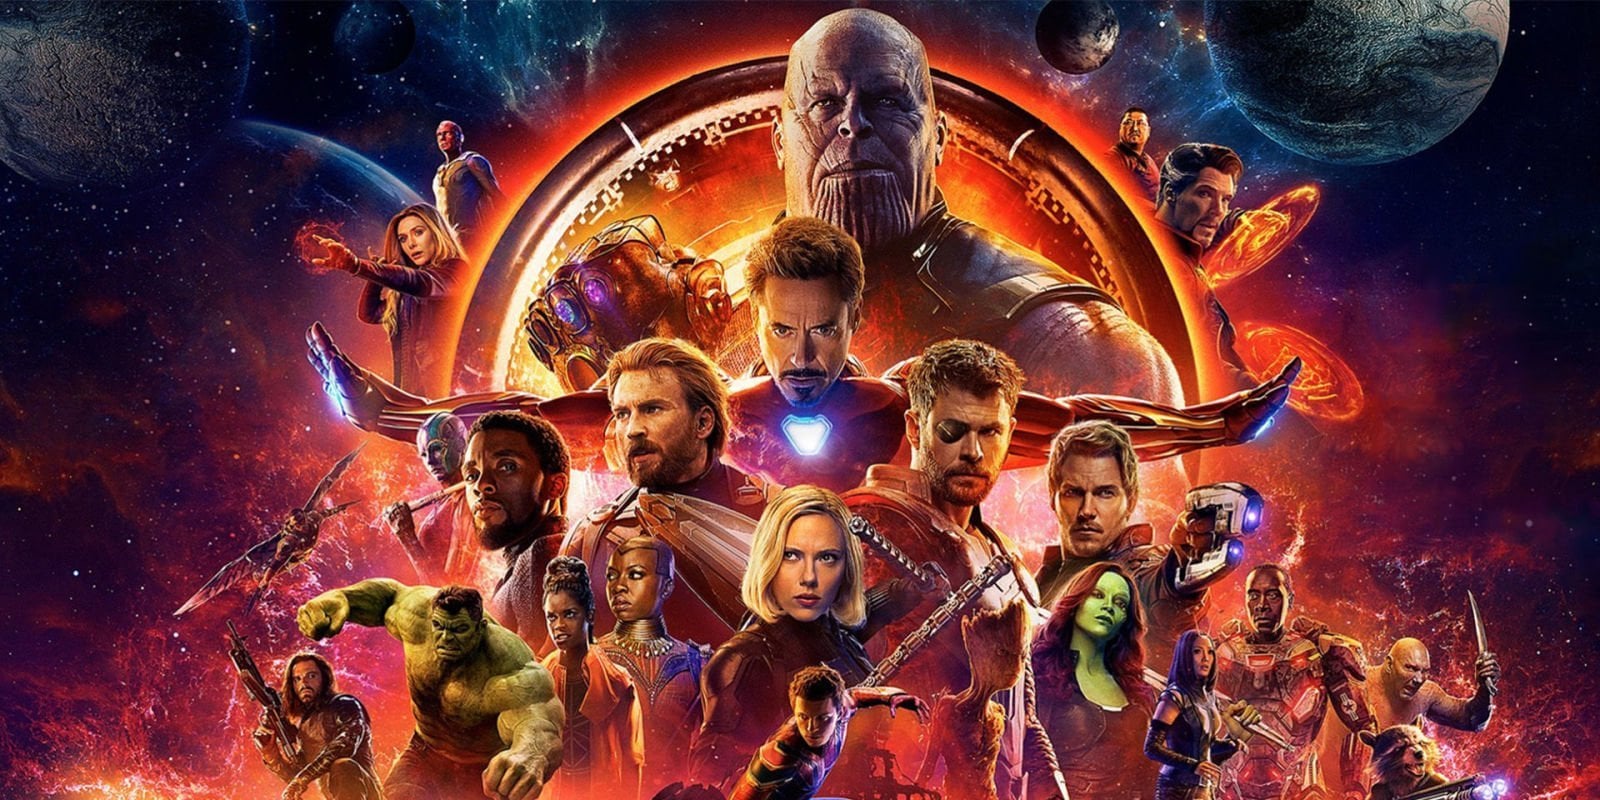 Avengers: Infinity War Movie Poster